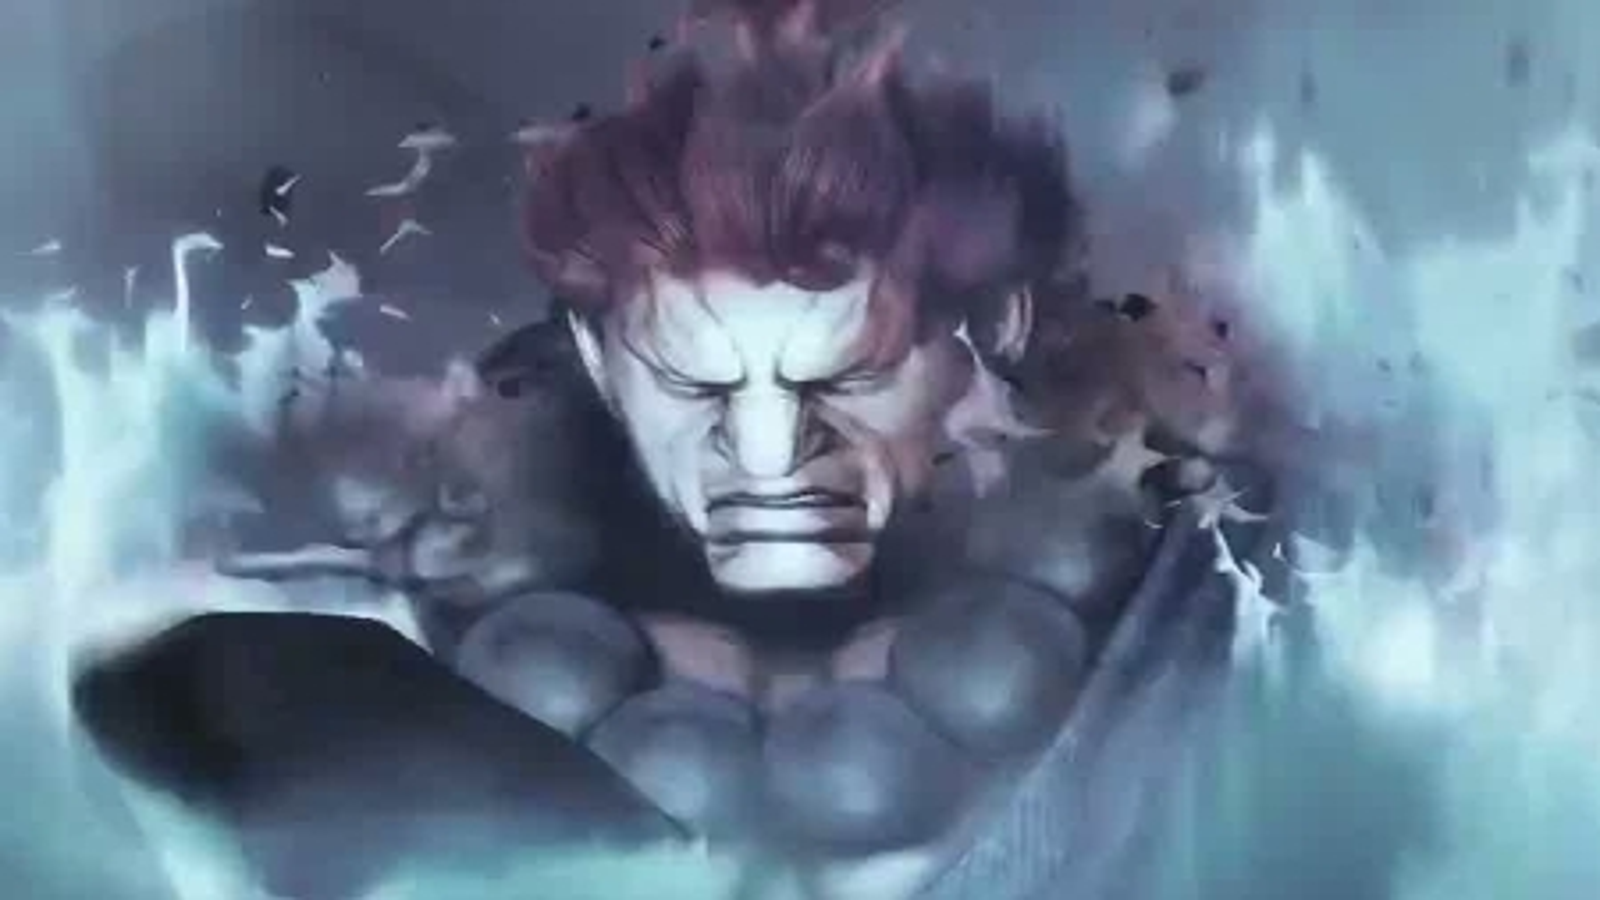 EVO: Ono Fala Sobre Cole MacGrath em Street Fighter X Tekken